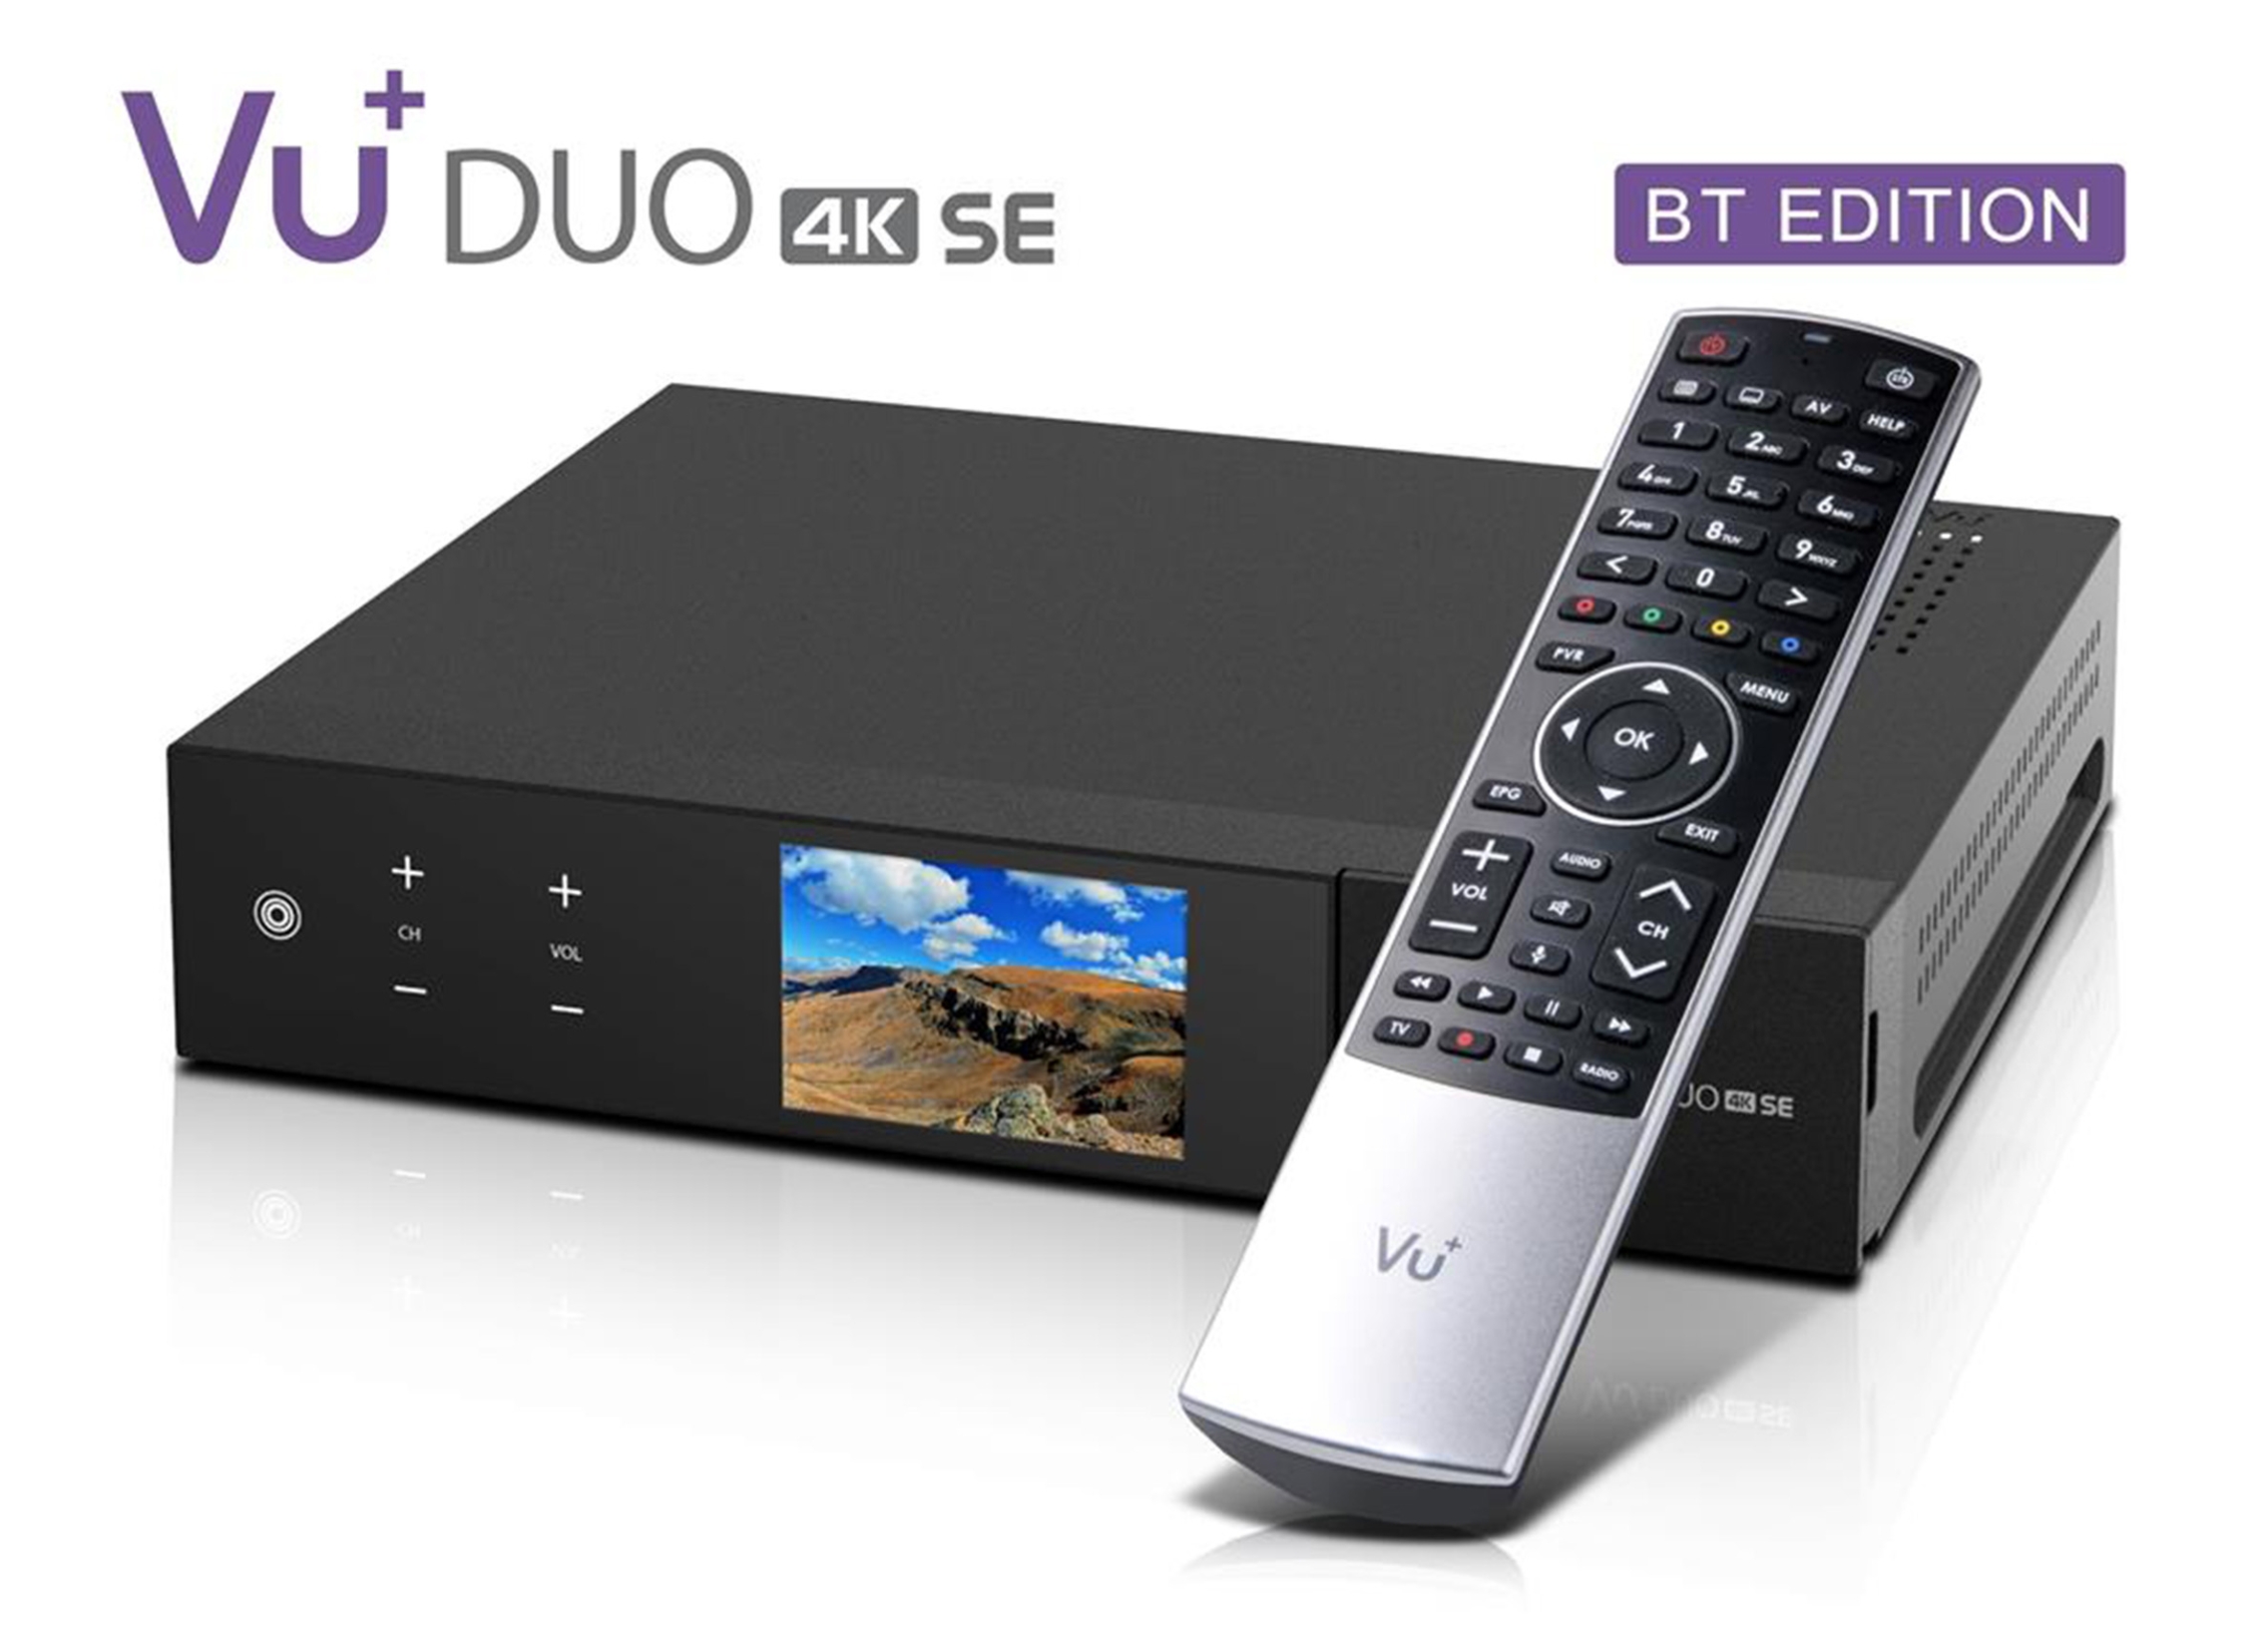 VU+ Duo 4K SE BT 1xDVB-C FBC Linux Receiver